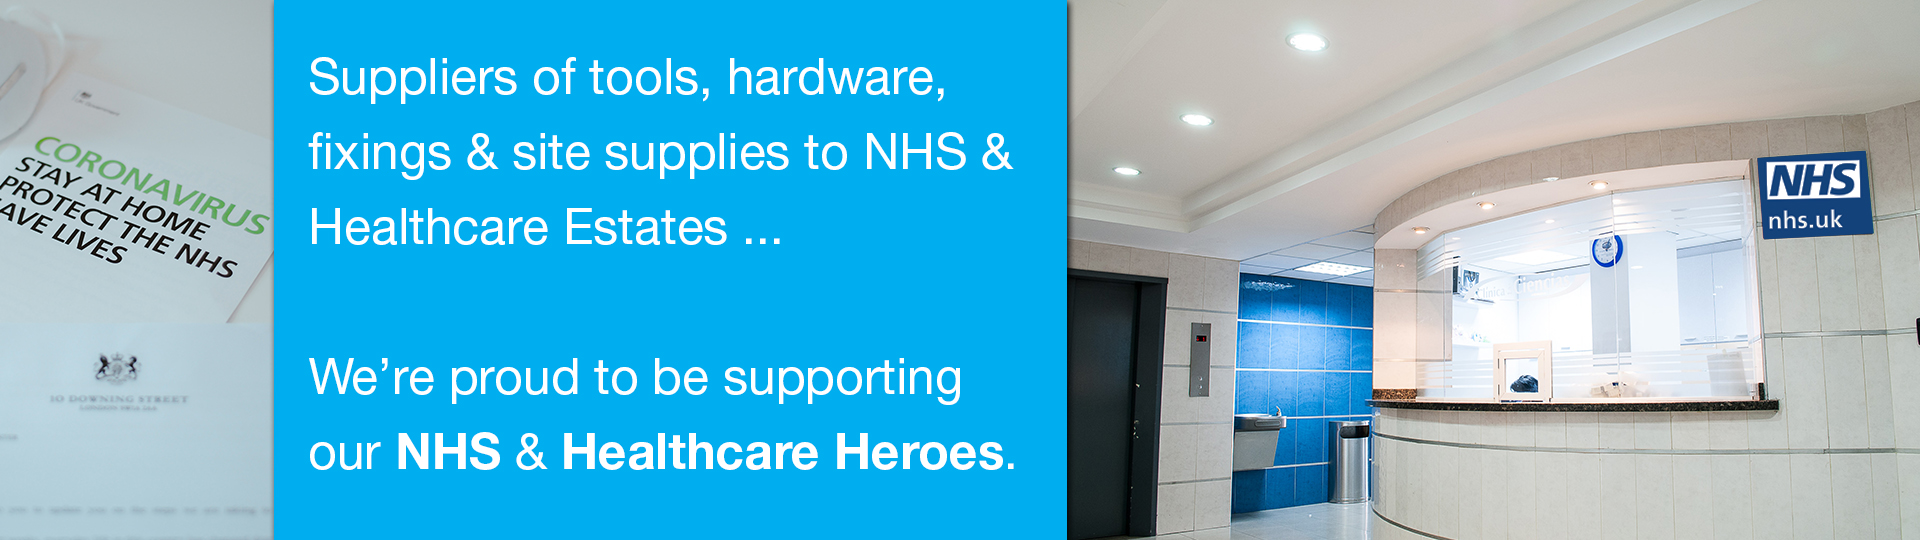 NHS hardware supplier 